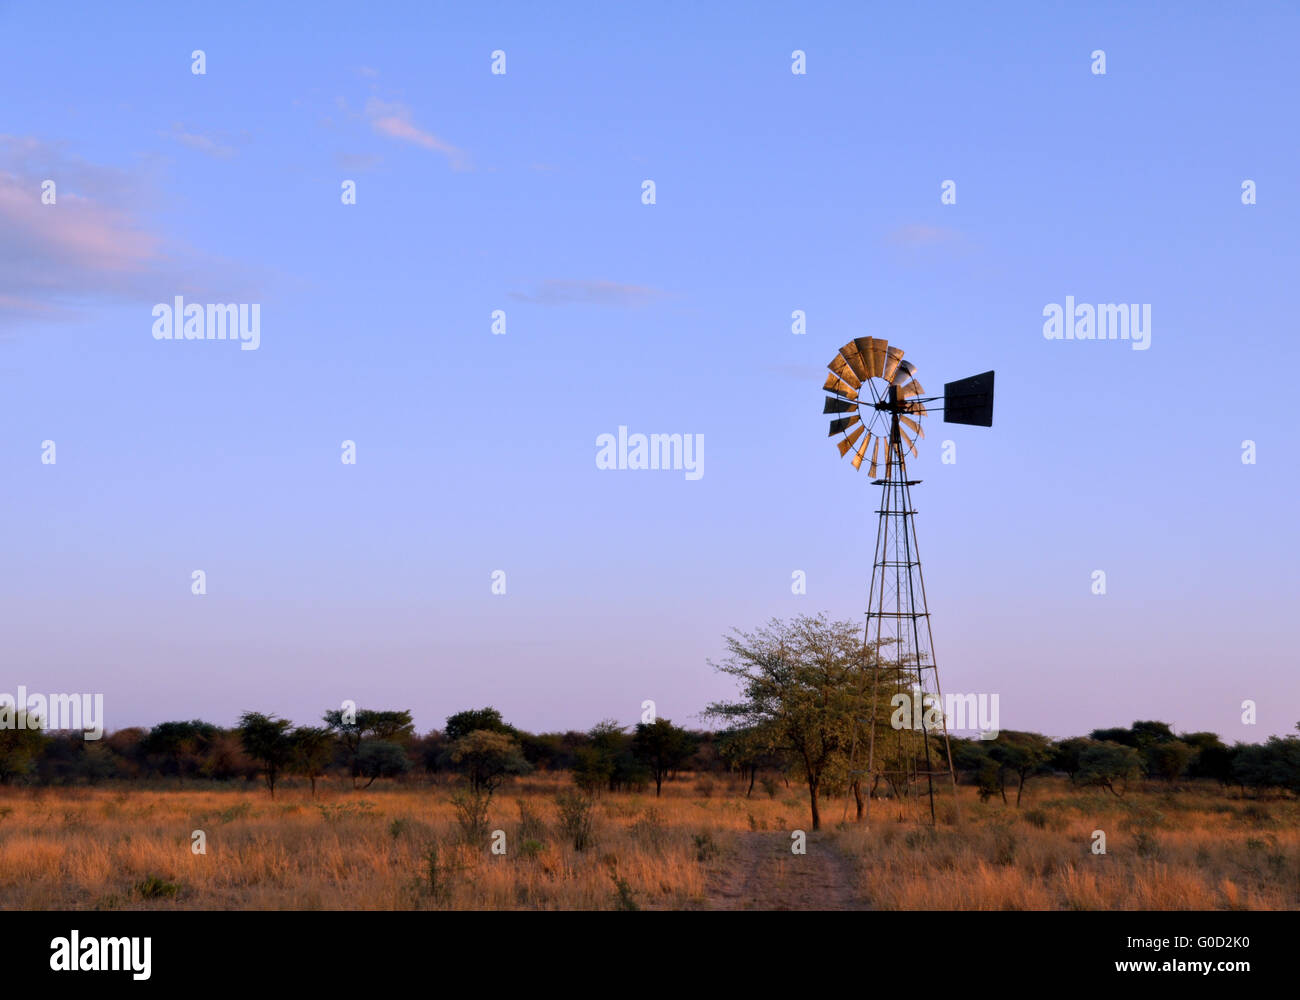 Windmill in desert Stock Photo